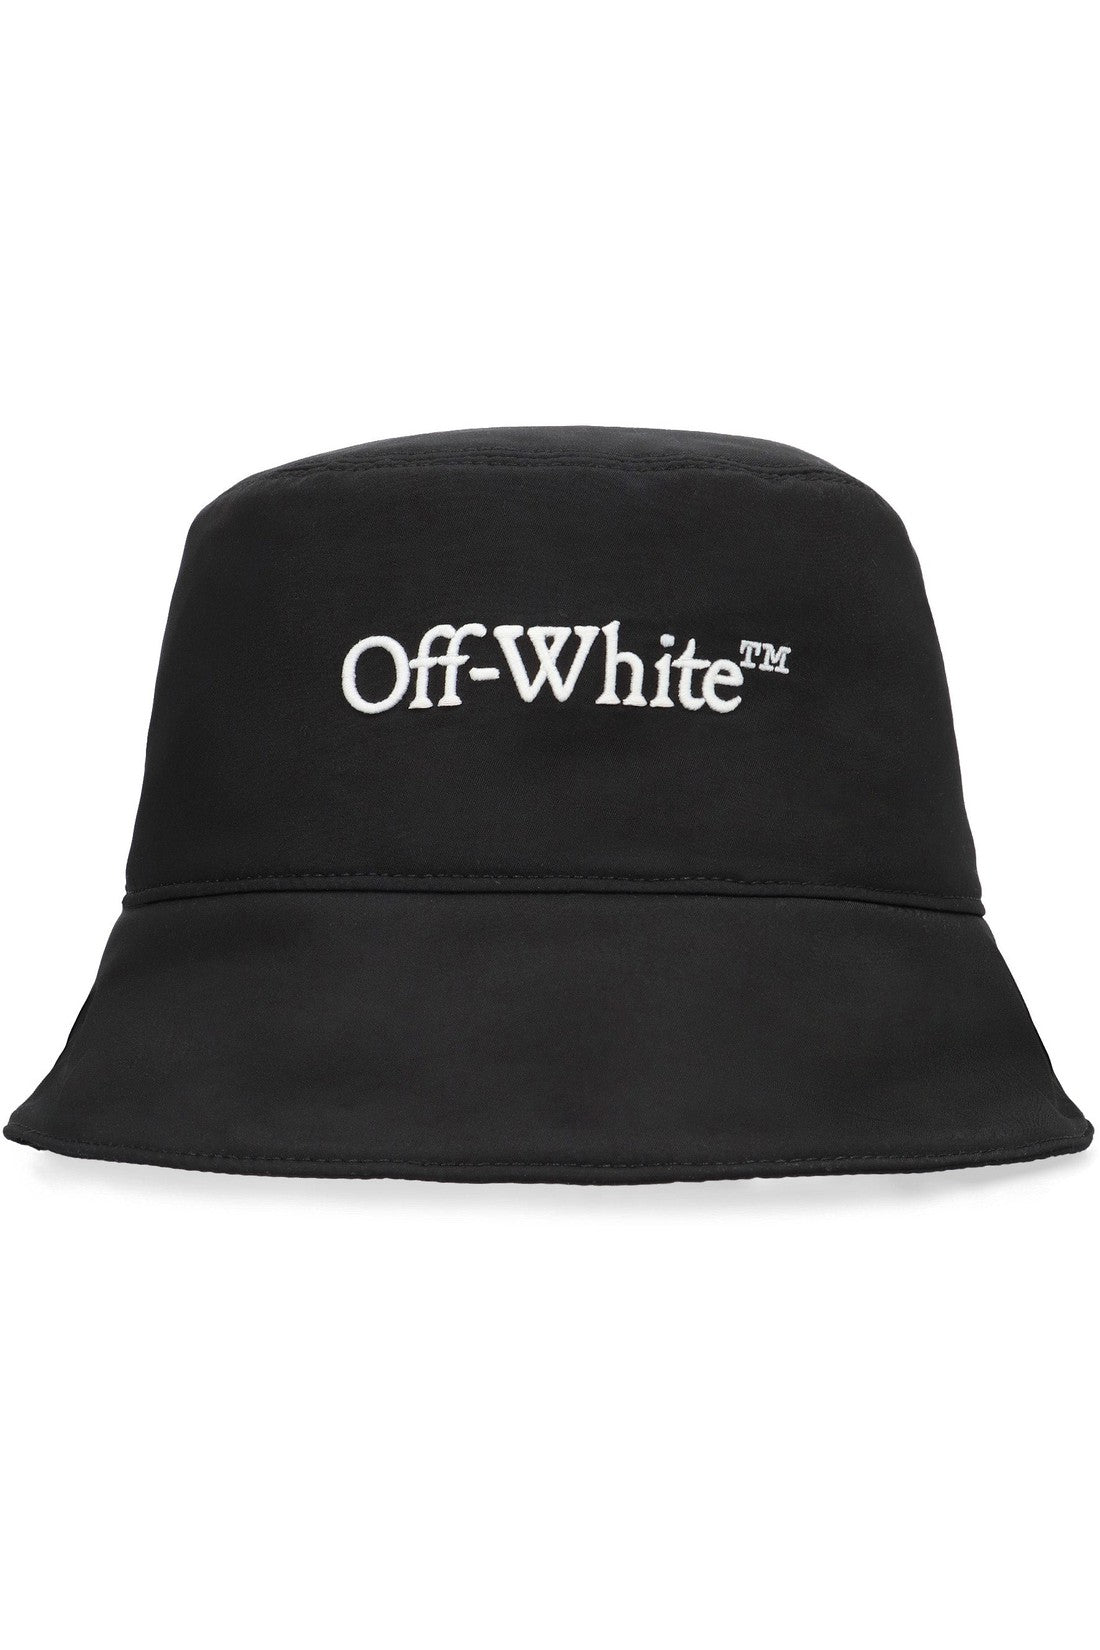 Off-White-OUTLET-SALE-Bucket hat-ARCHIVIST